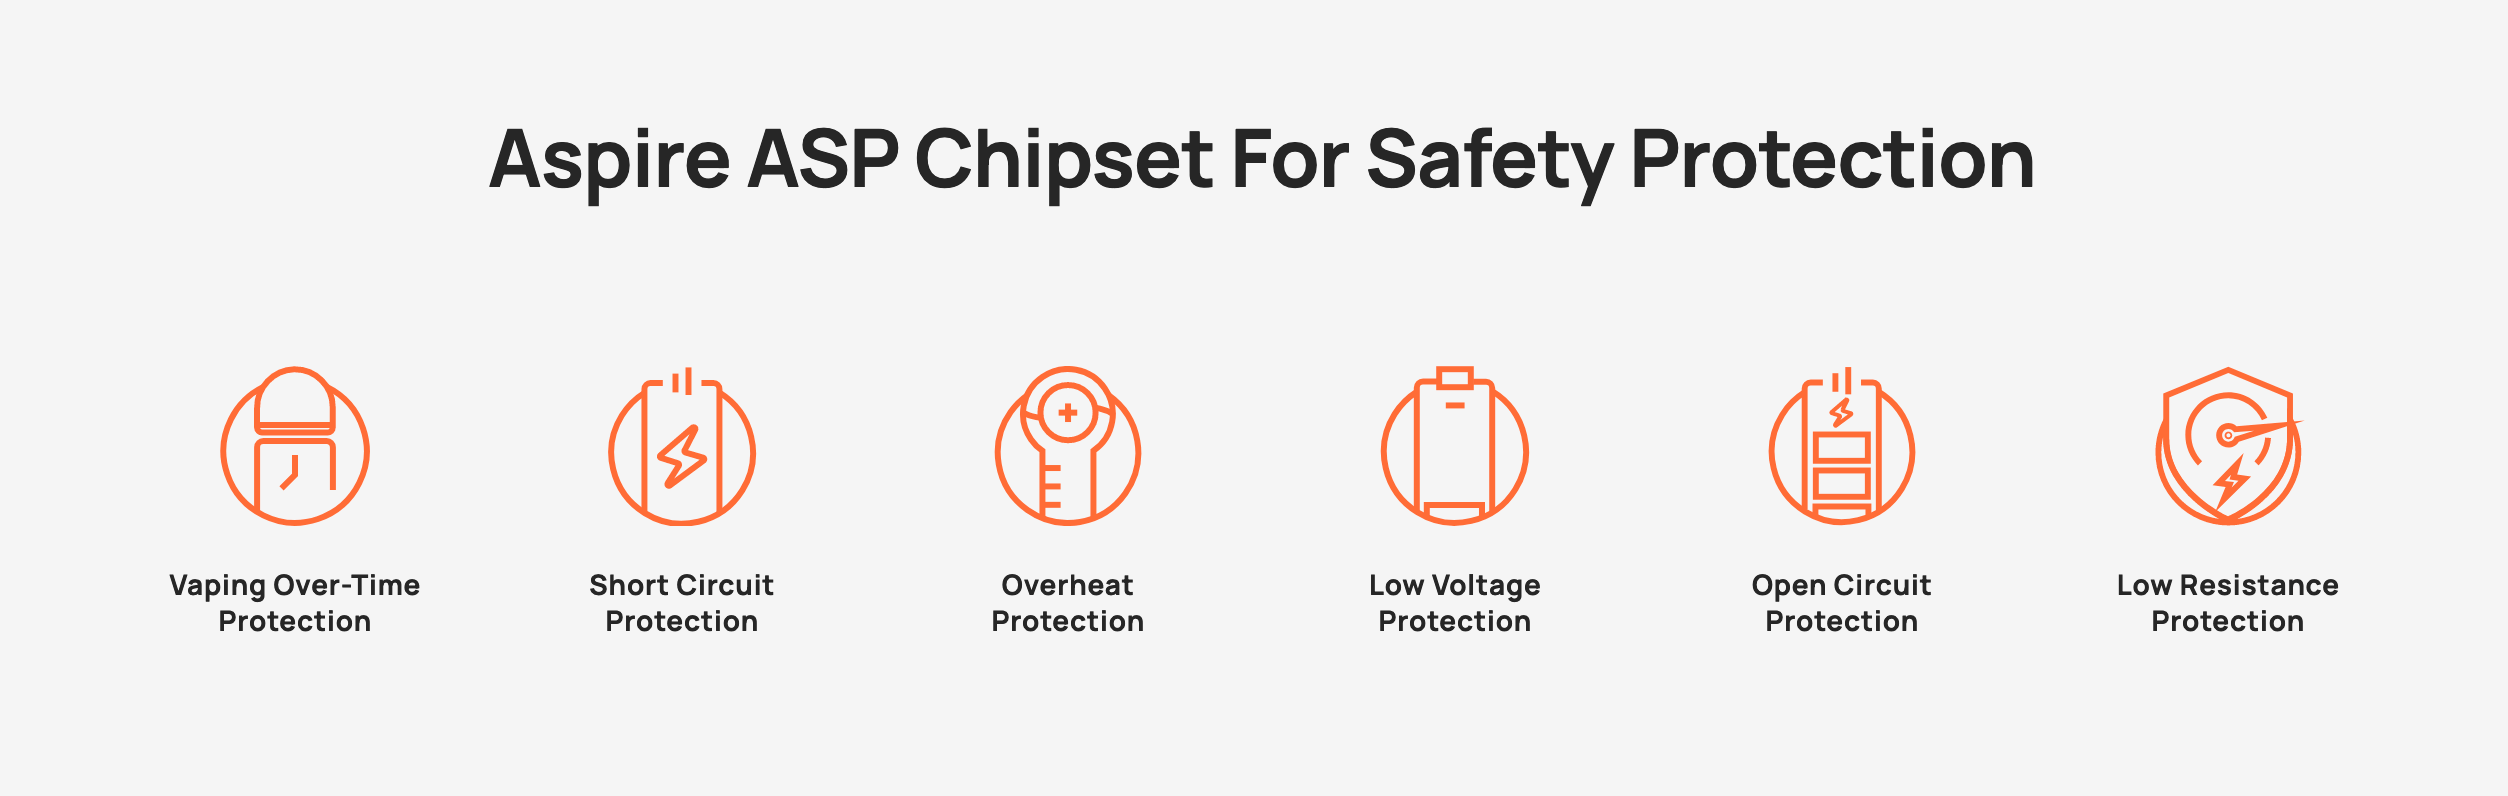 Aspire Flexus Pro Kit - Safety Protections